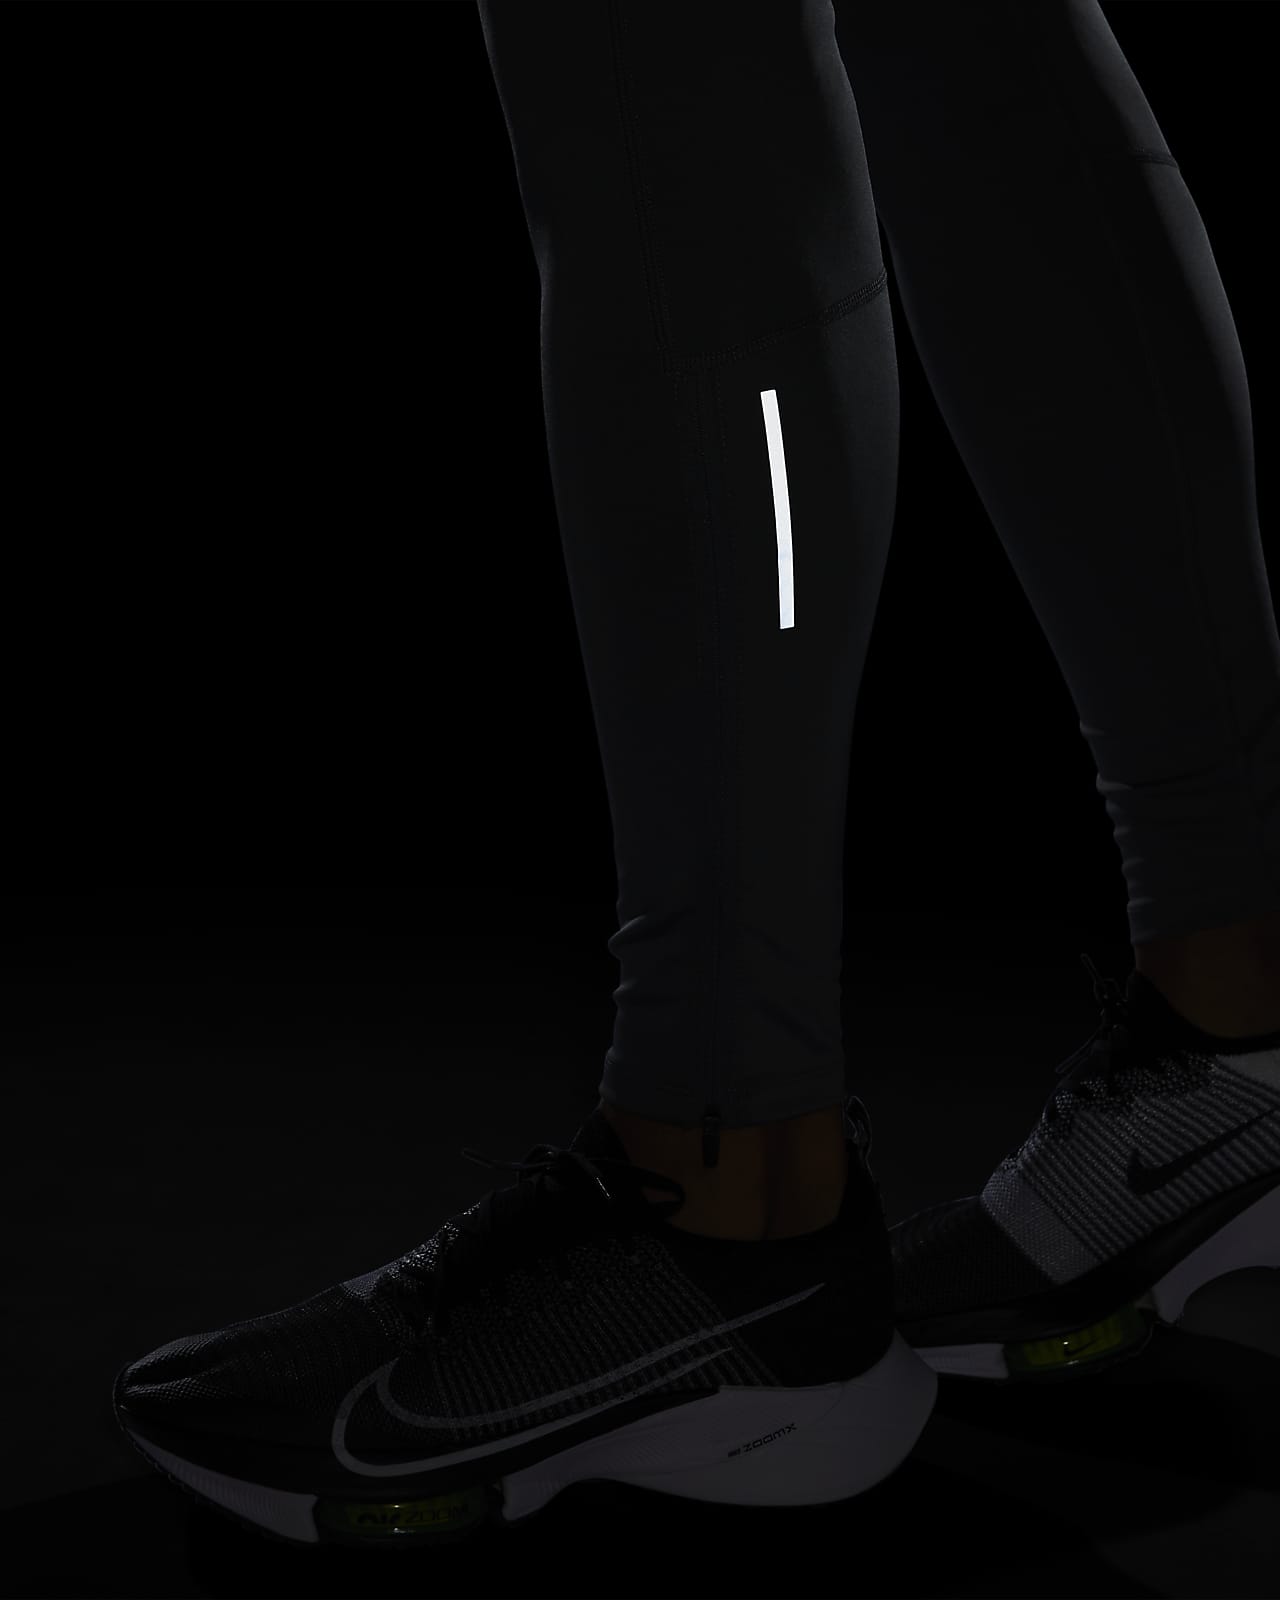 Nike Challenger M  Man Clothing Tights Nike